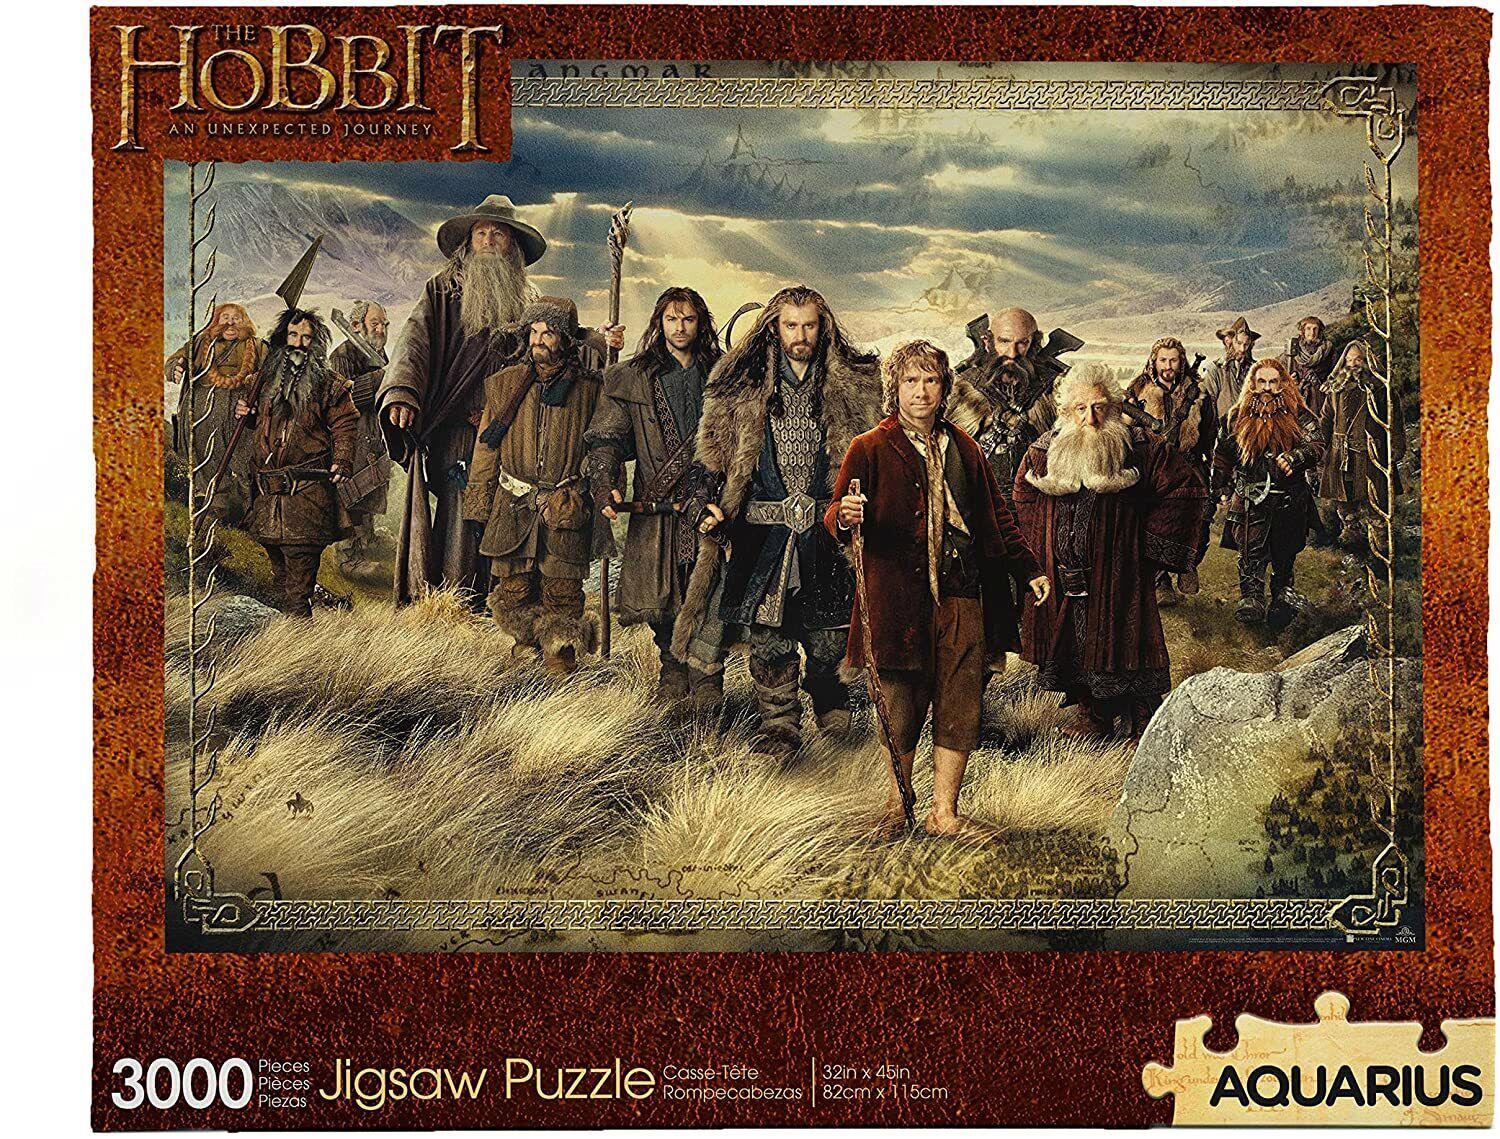 Puzzle Der Hobbit